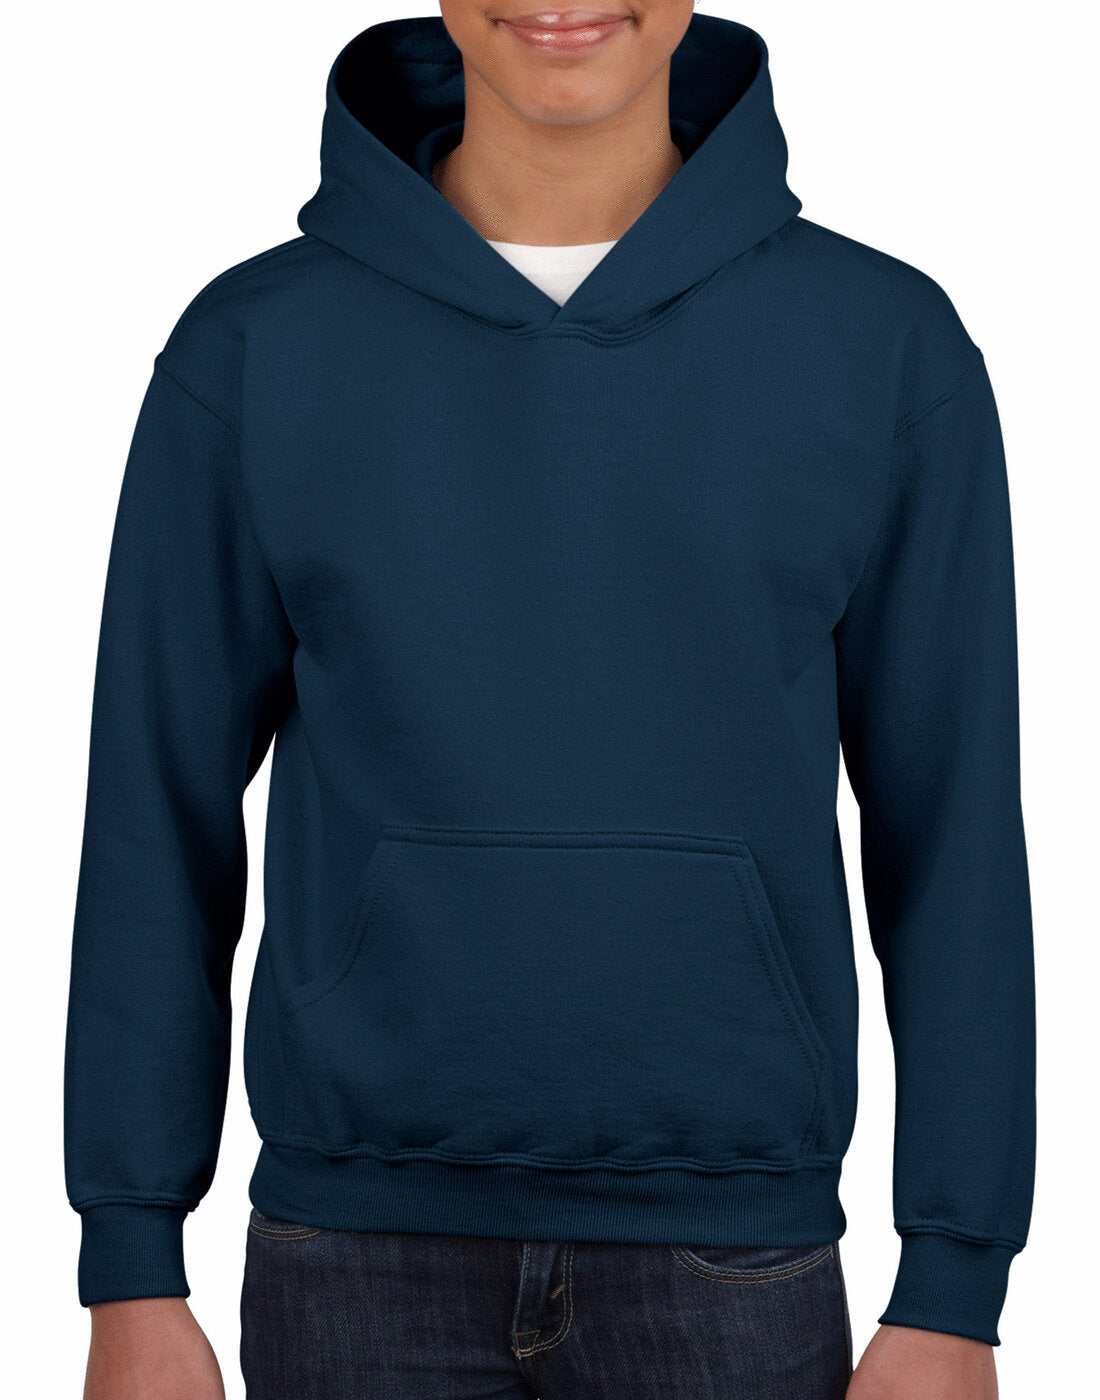 Gildan Kids Heavy Blend Hooded Sweatshirt - Navy